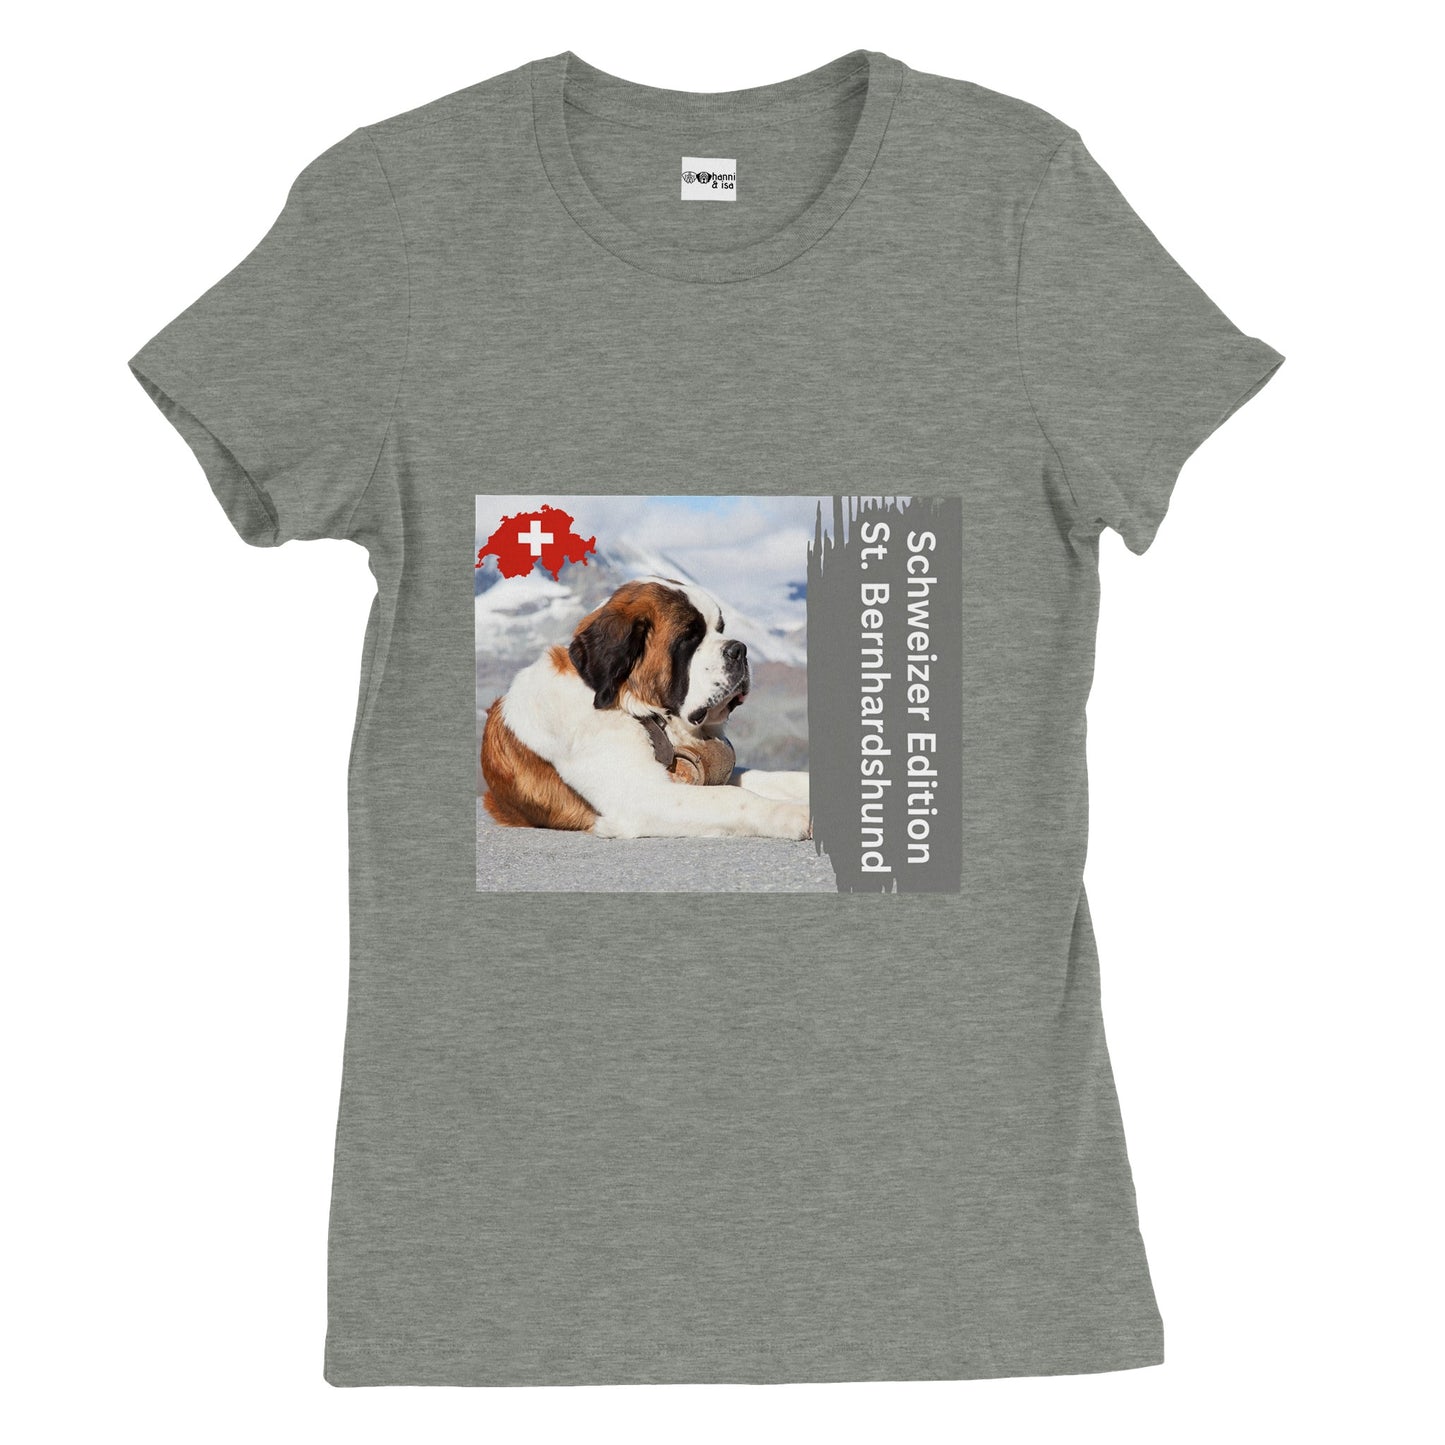 Swiss Edition Beethoven Women's T-Shirt